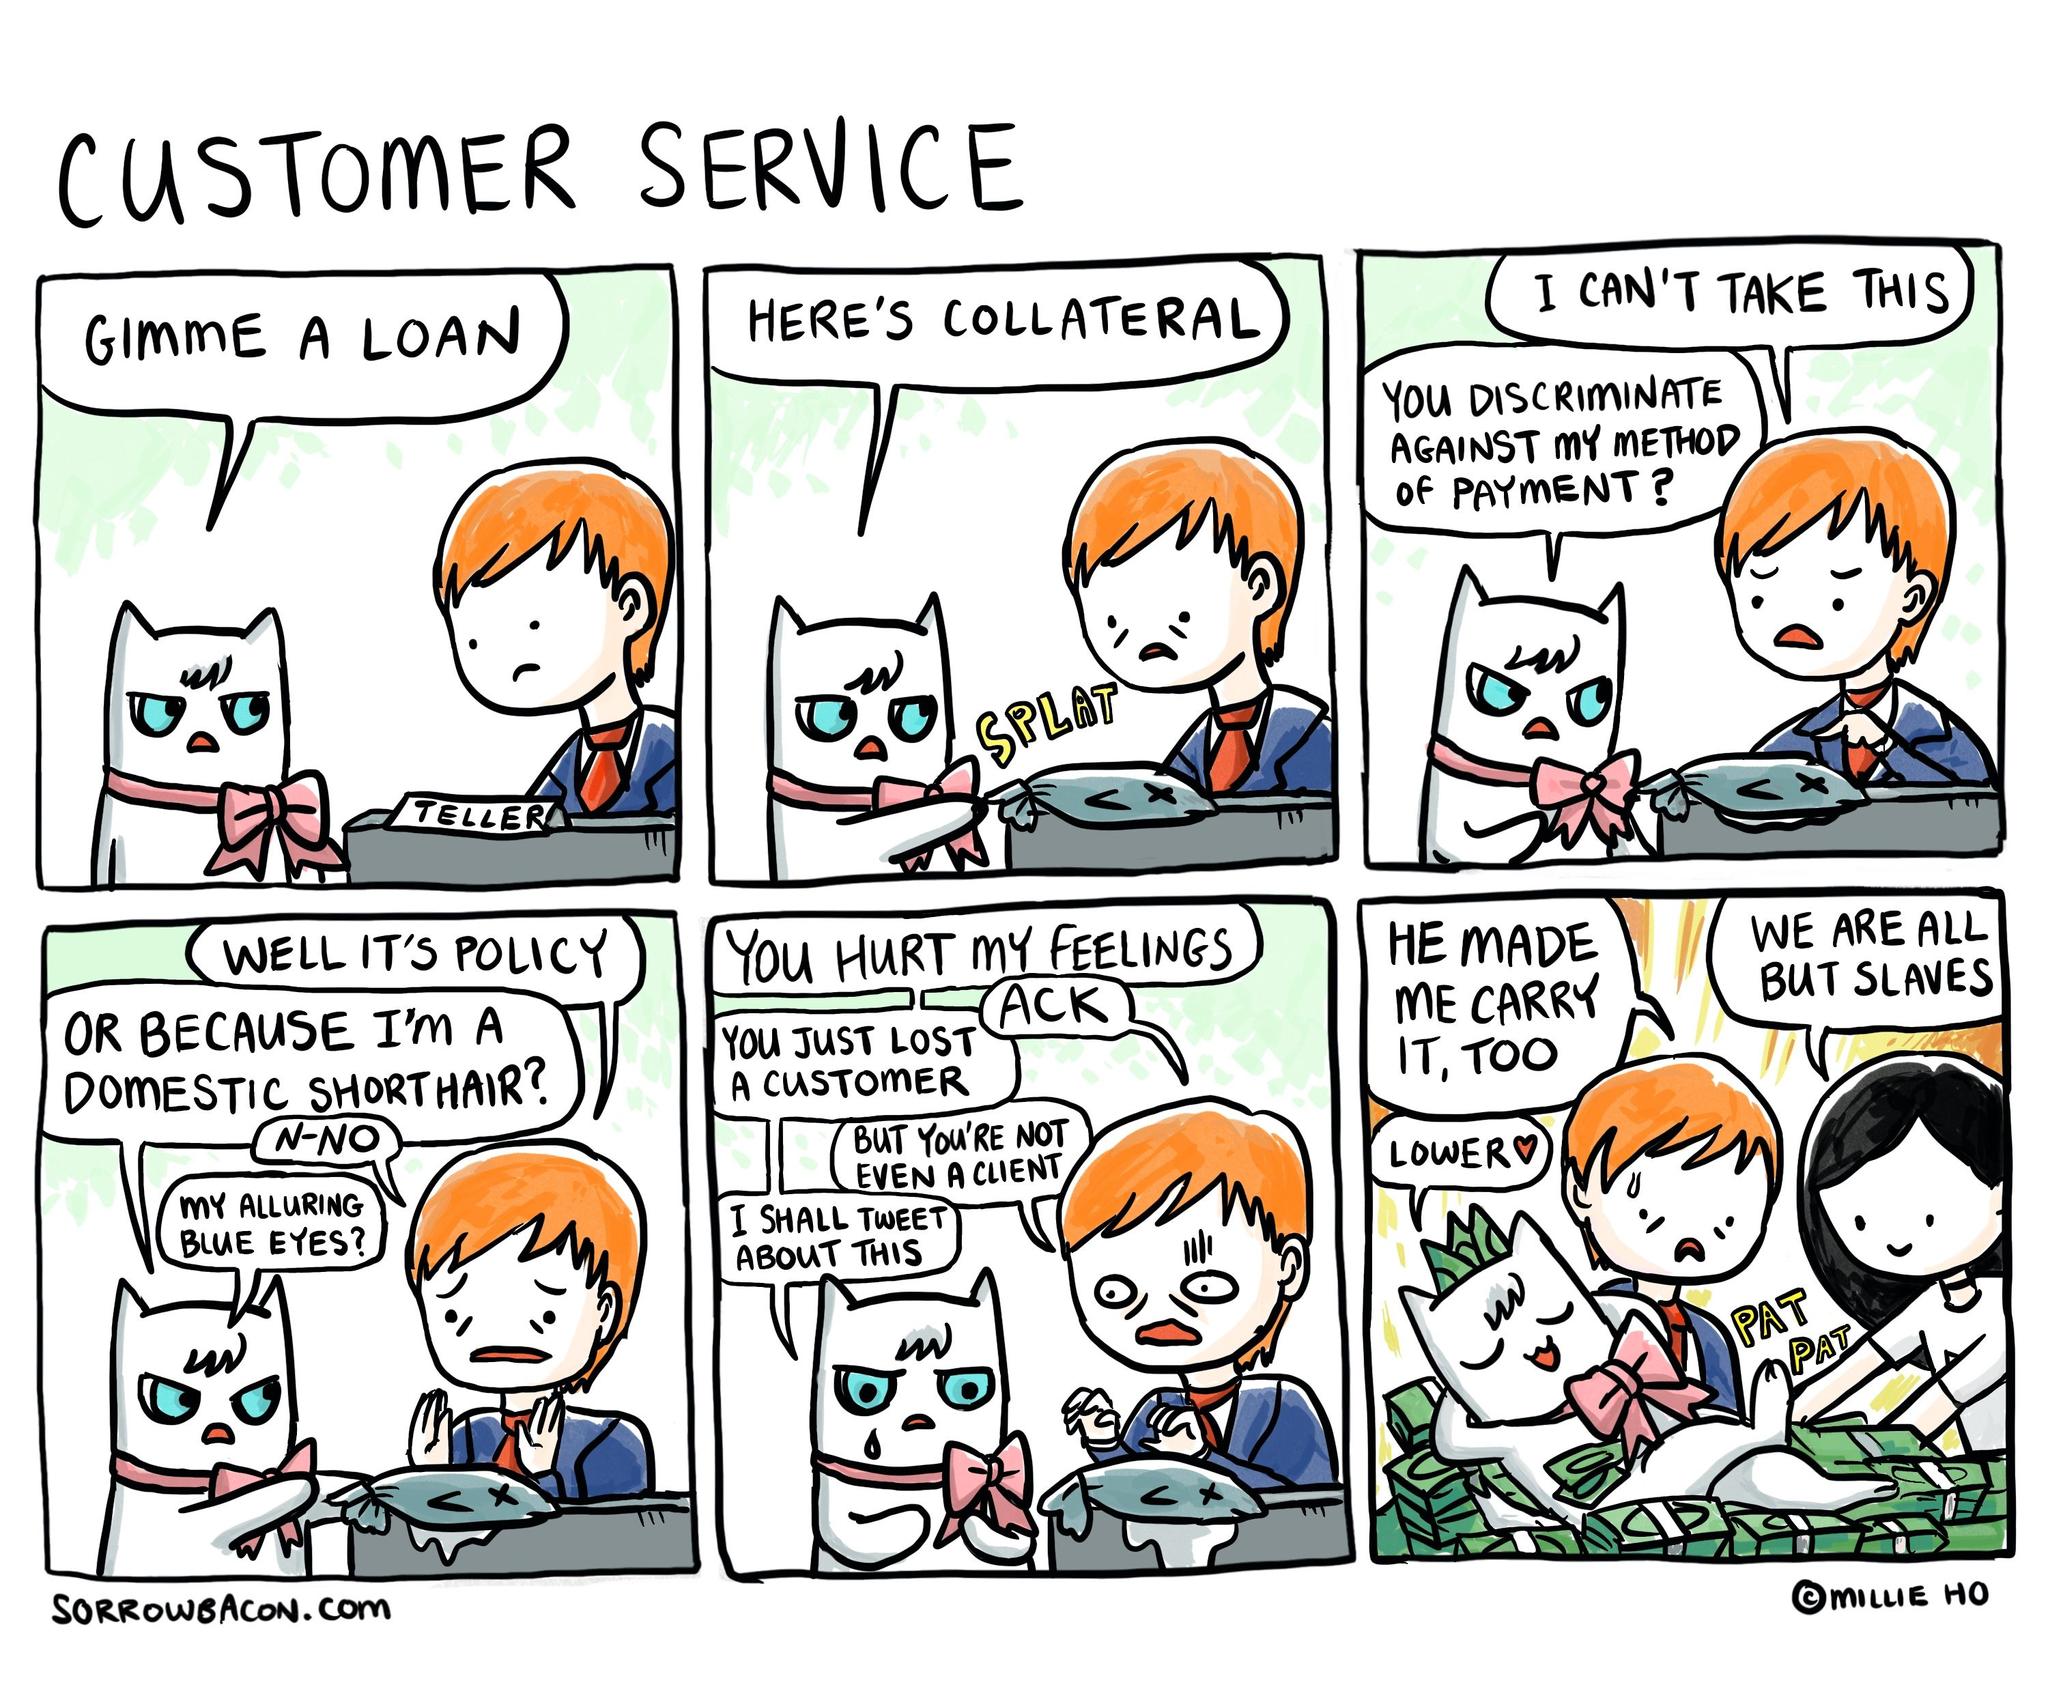 Customer Service sorrowbacon comic